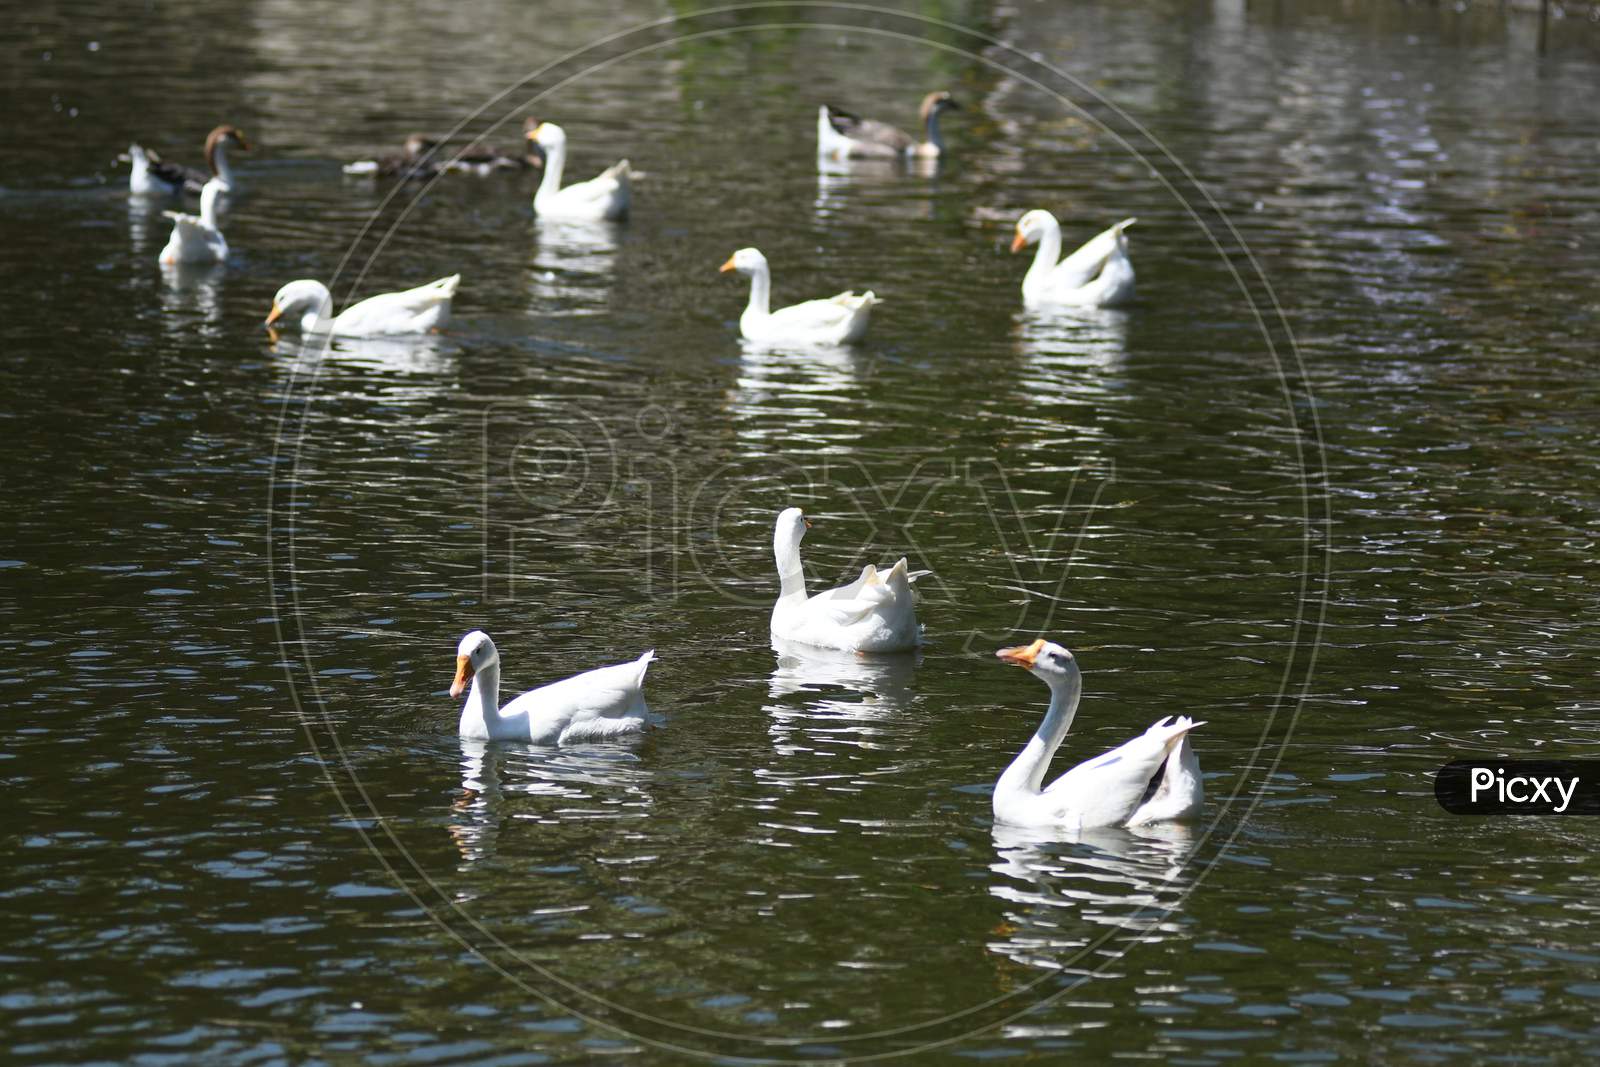 A Flock Of White Geese Swim On Joor Pukhuri In Guwahati On Sep 20,2020